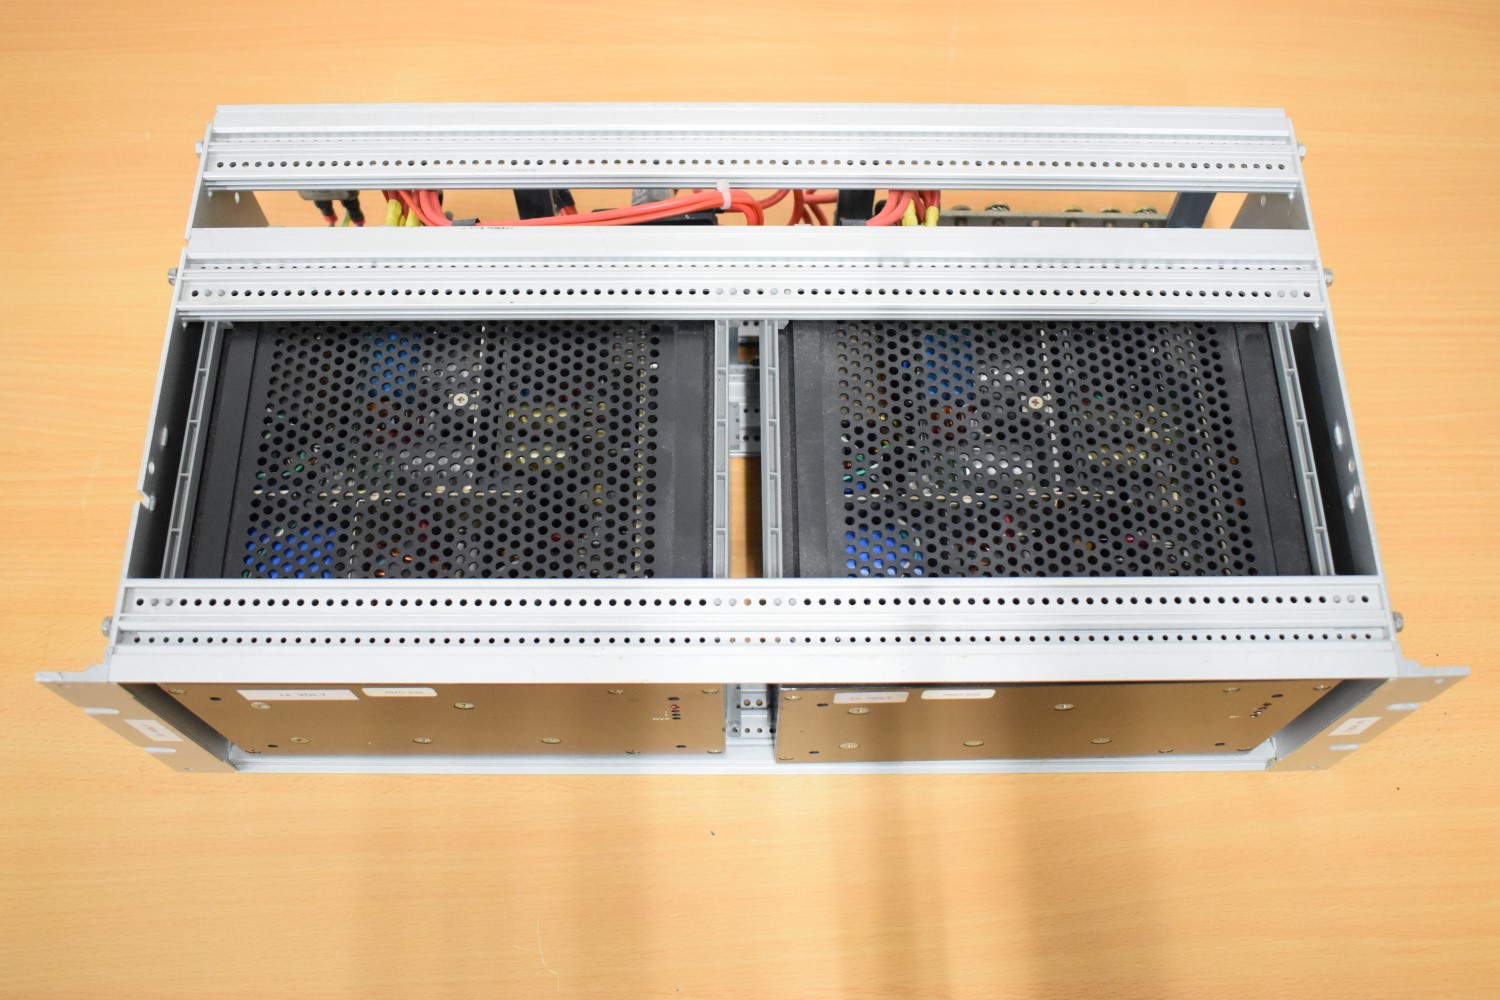 2x Delta Elektronika S15-18 12 Volts Power Supply – in 19inch rack Panel